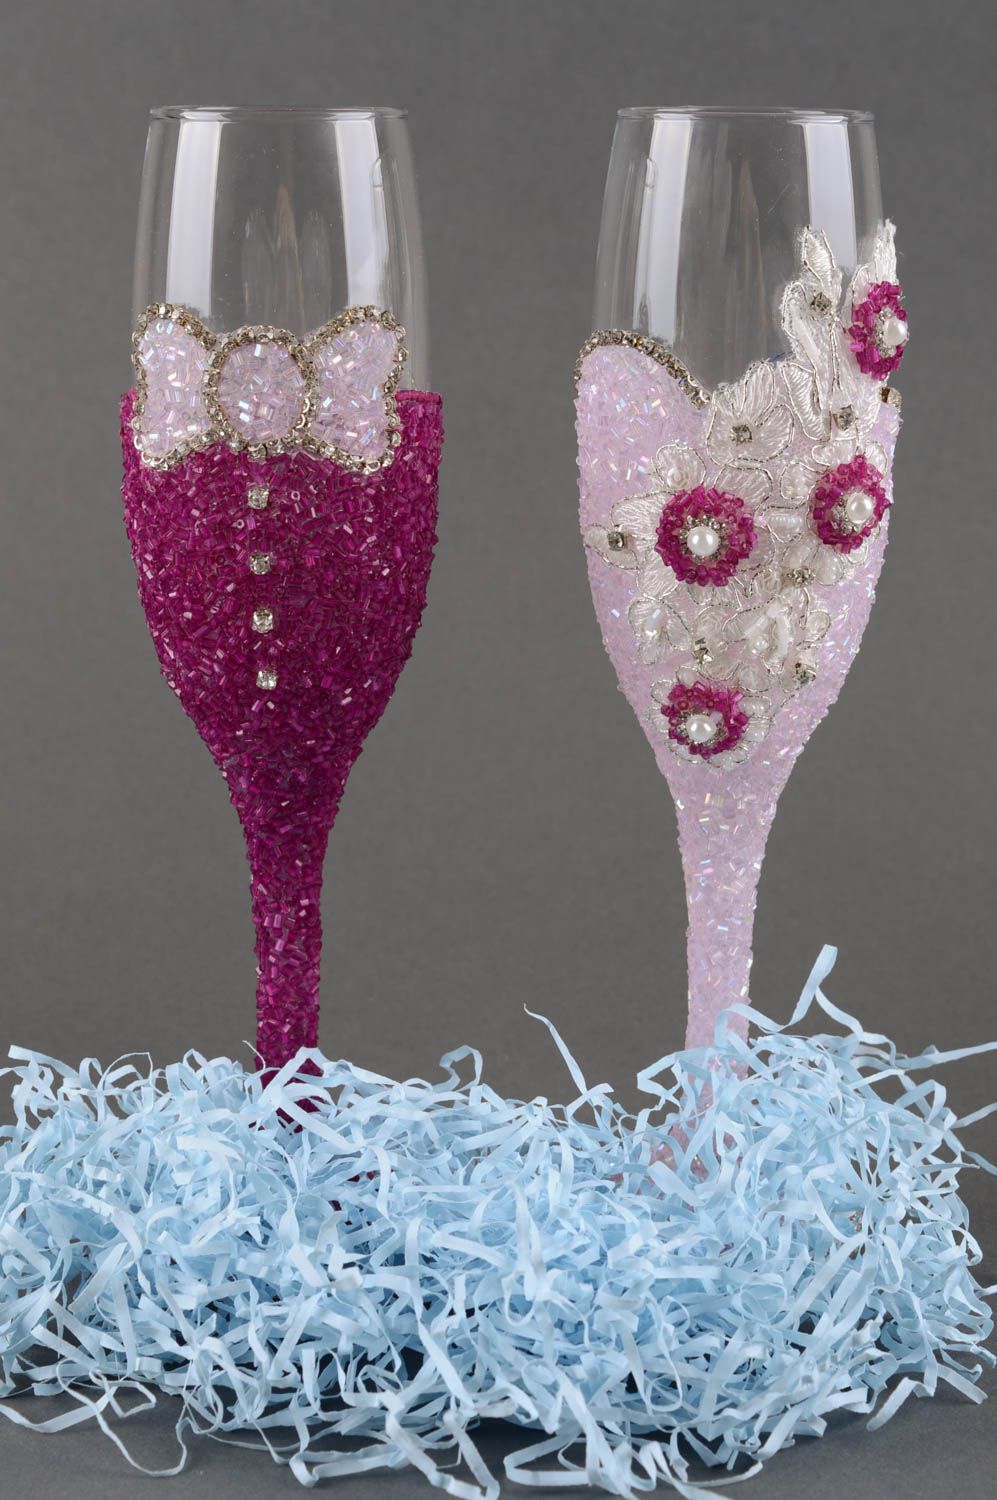 Buy Wine Glasses Decorative Wine Glasses Champagne Flutes Handmade Wedding Decor 600904564